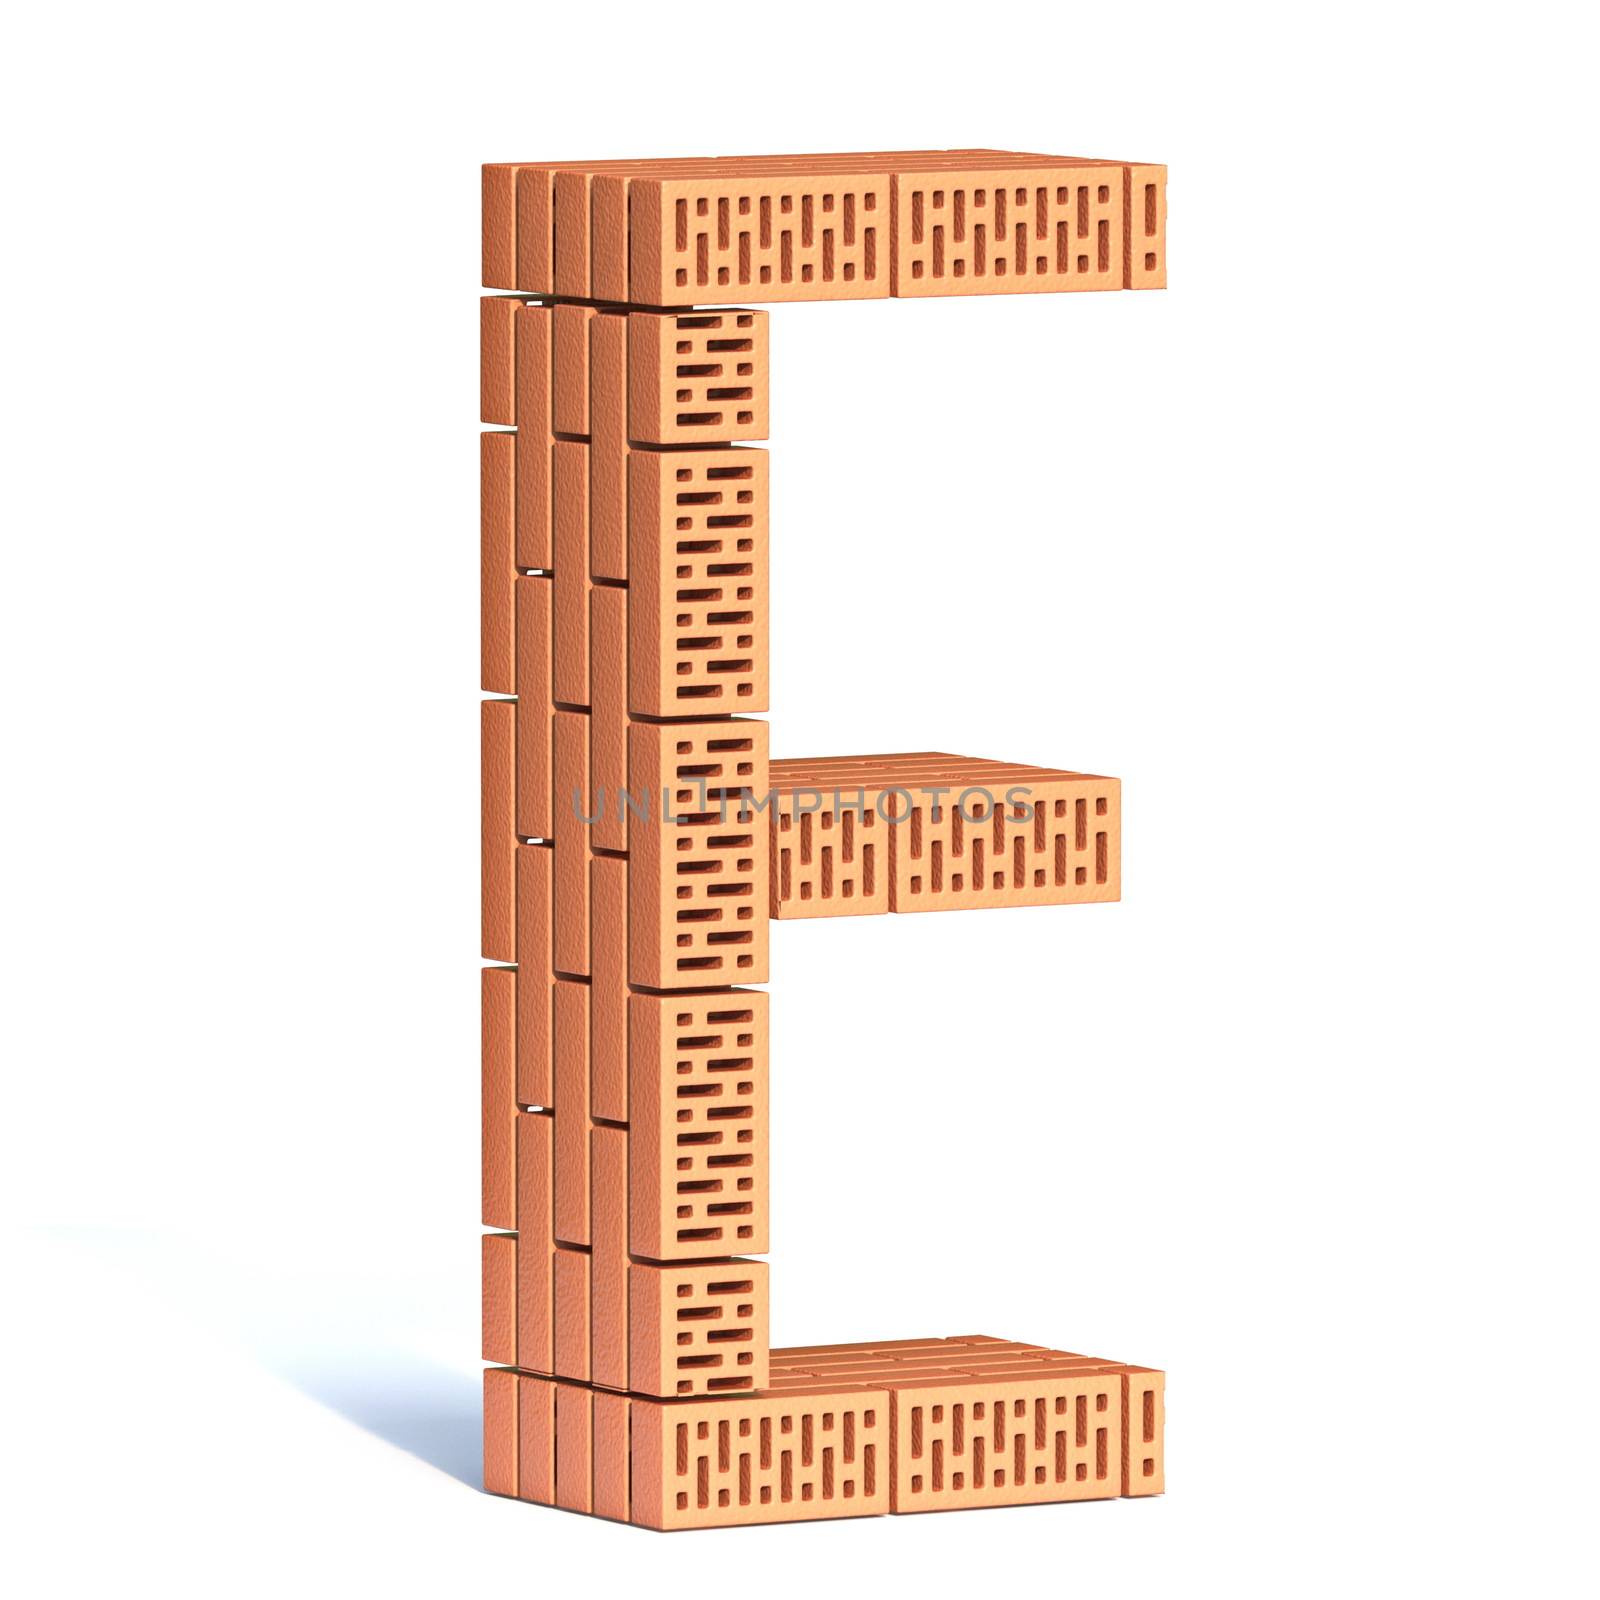 Brick wall font Letter E 3D render illustration isolated on white background